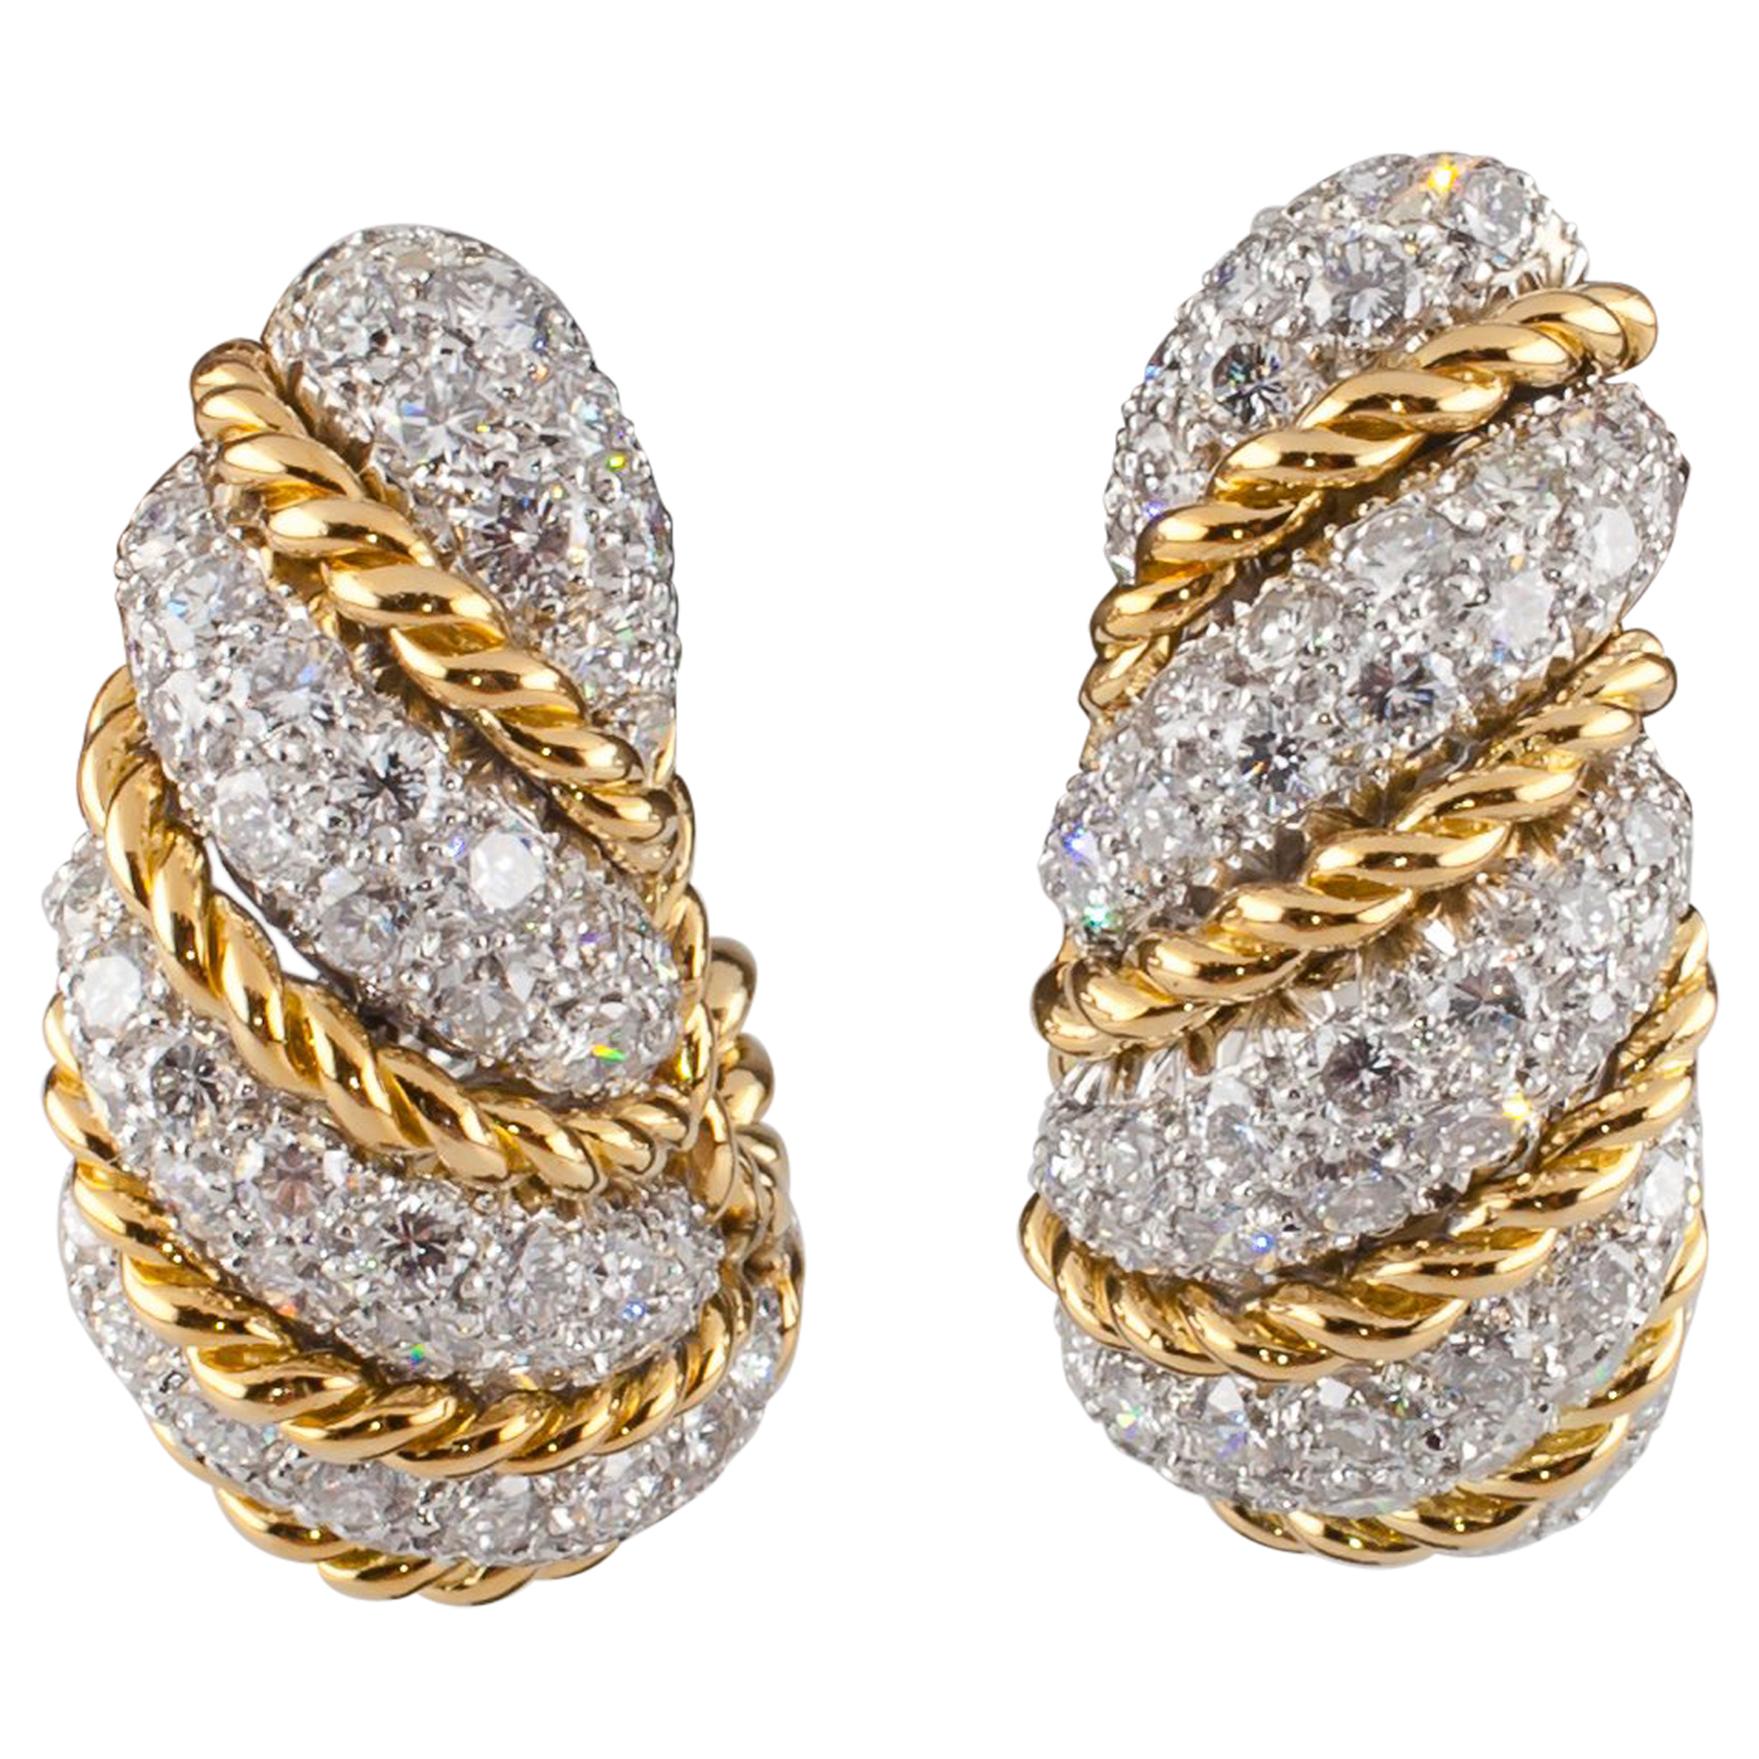 Van Cleef & Arpels, boucles d'oreilles huggies vintage bicolores en or 18 carats avec diamants de 10,00 carats